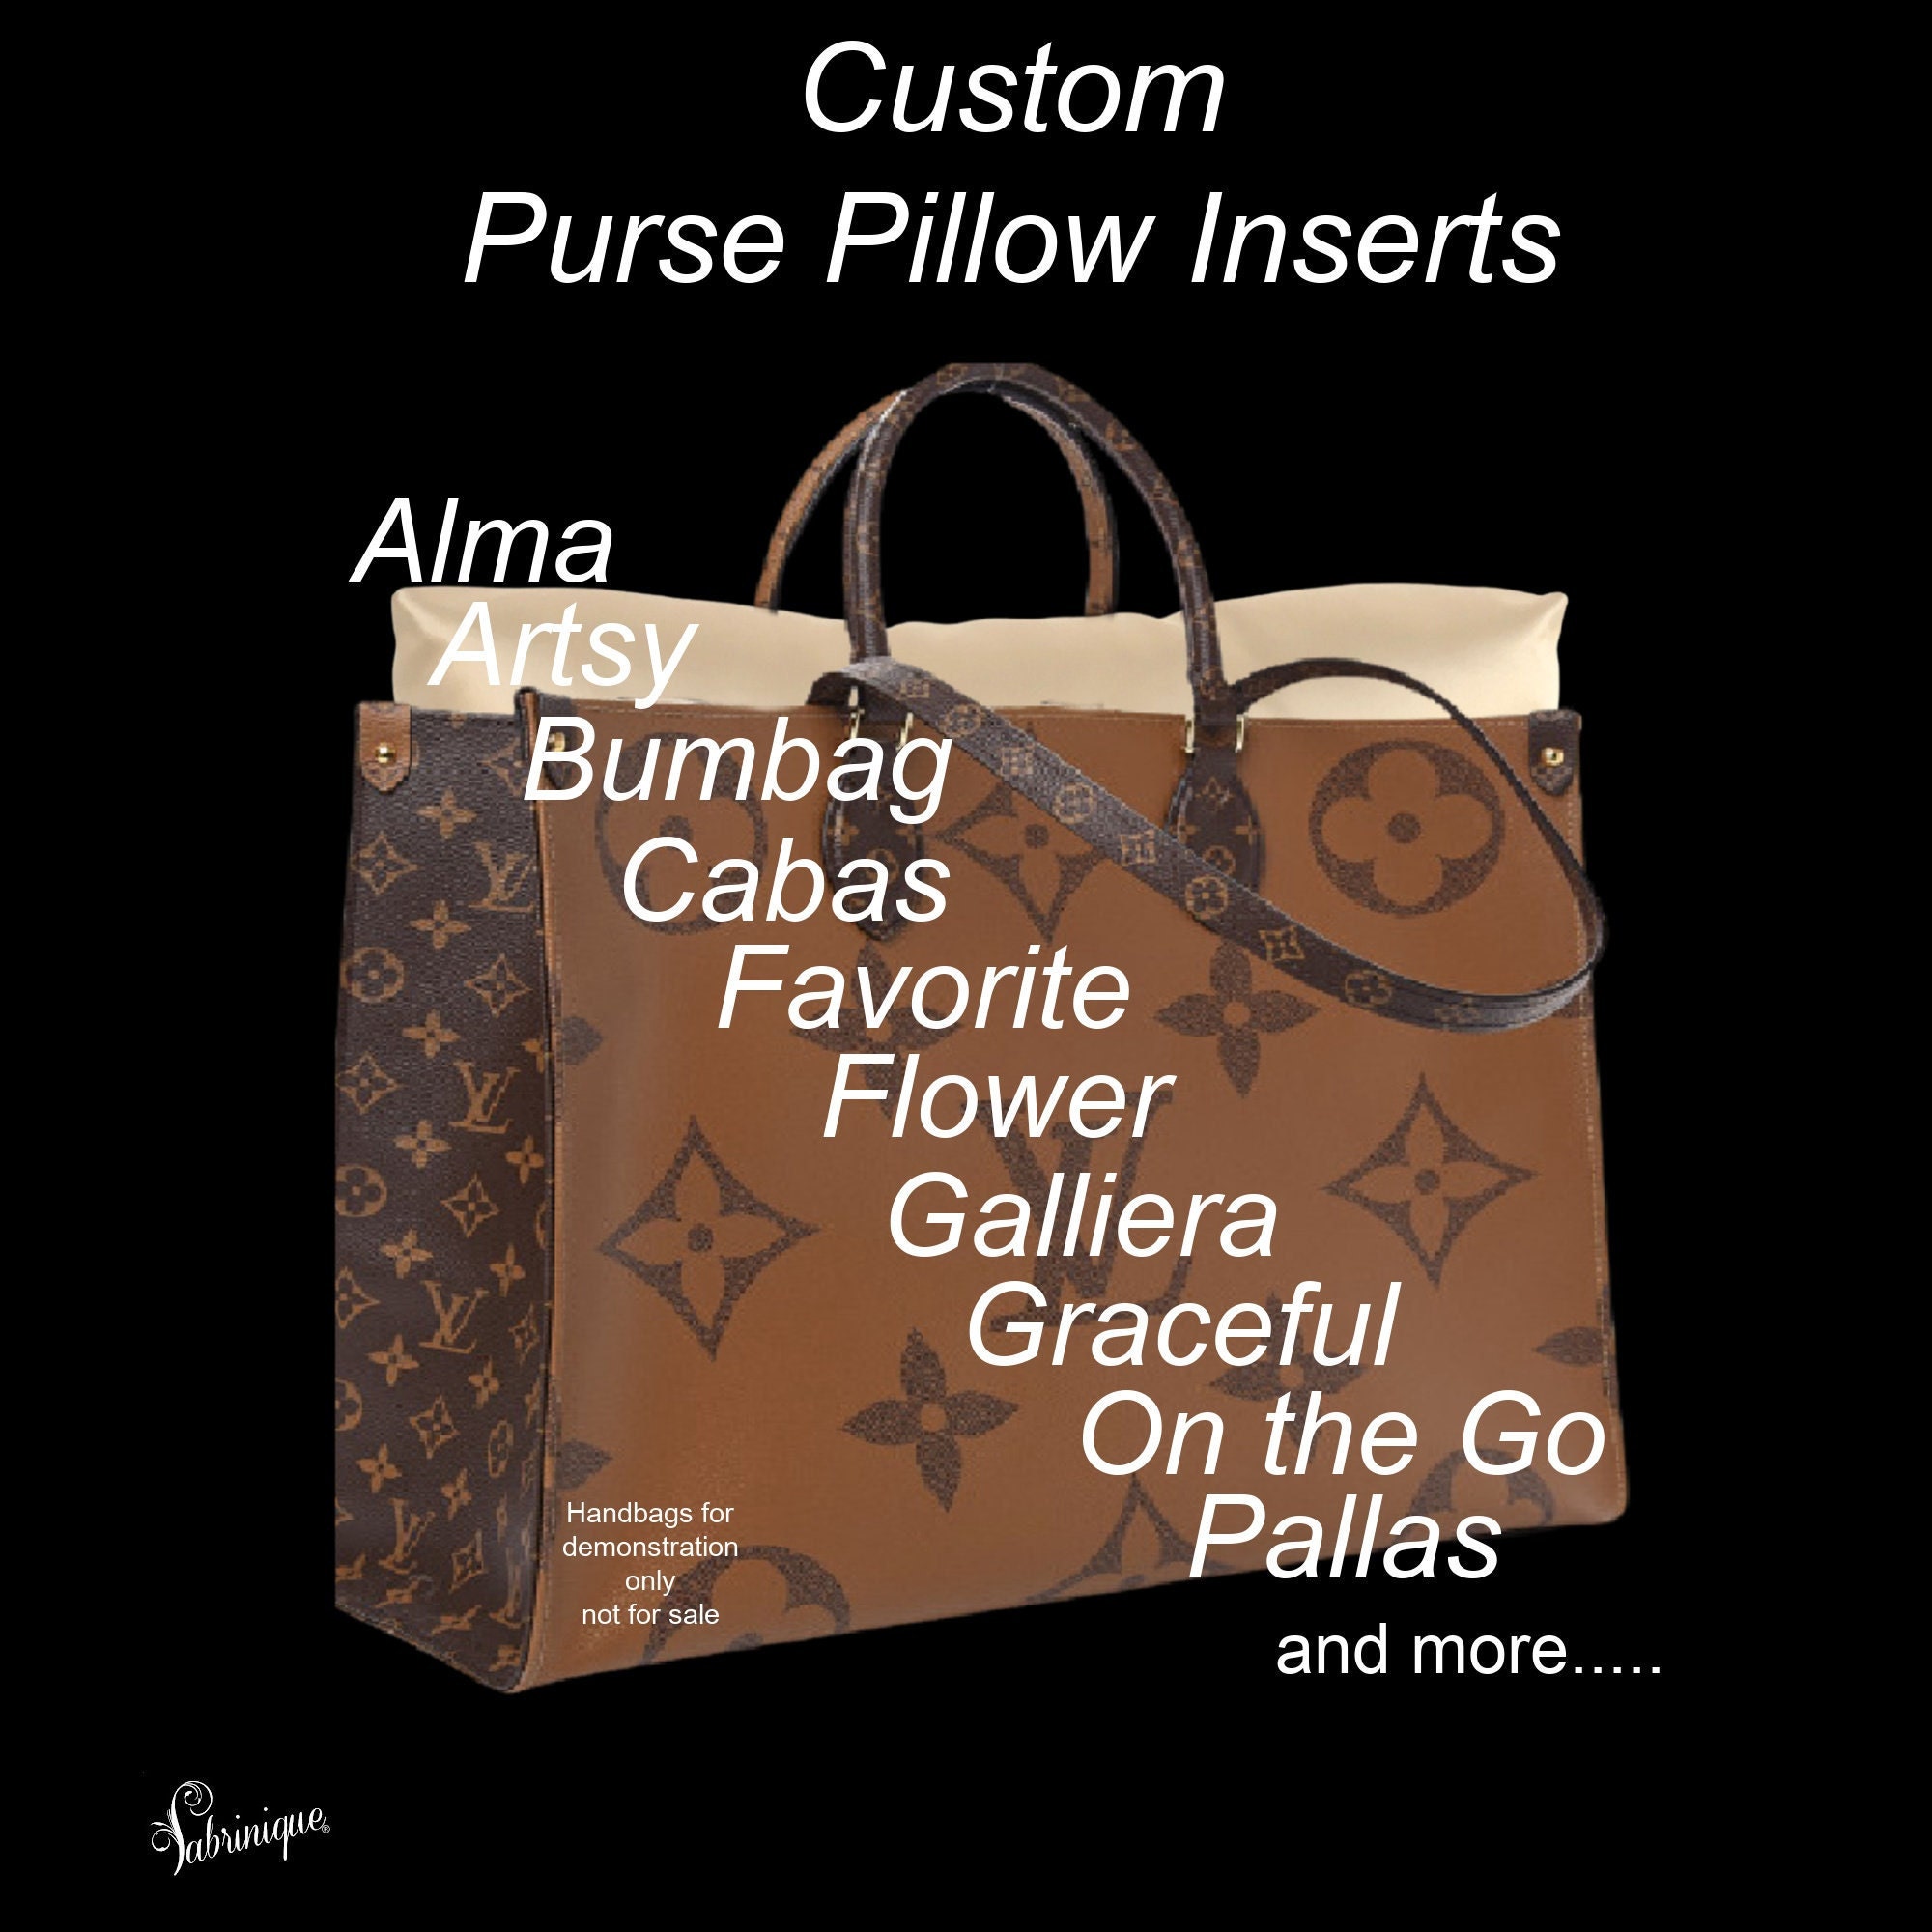 Custom Purse Pillow Inserts for LV Handbags on the Go 